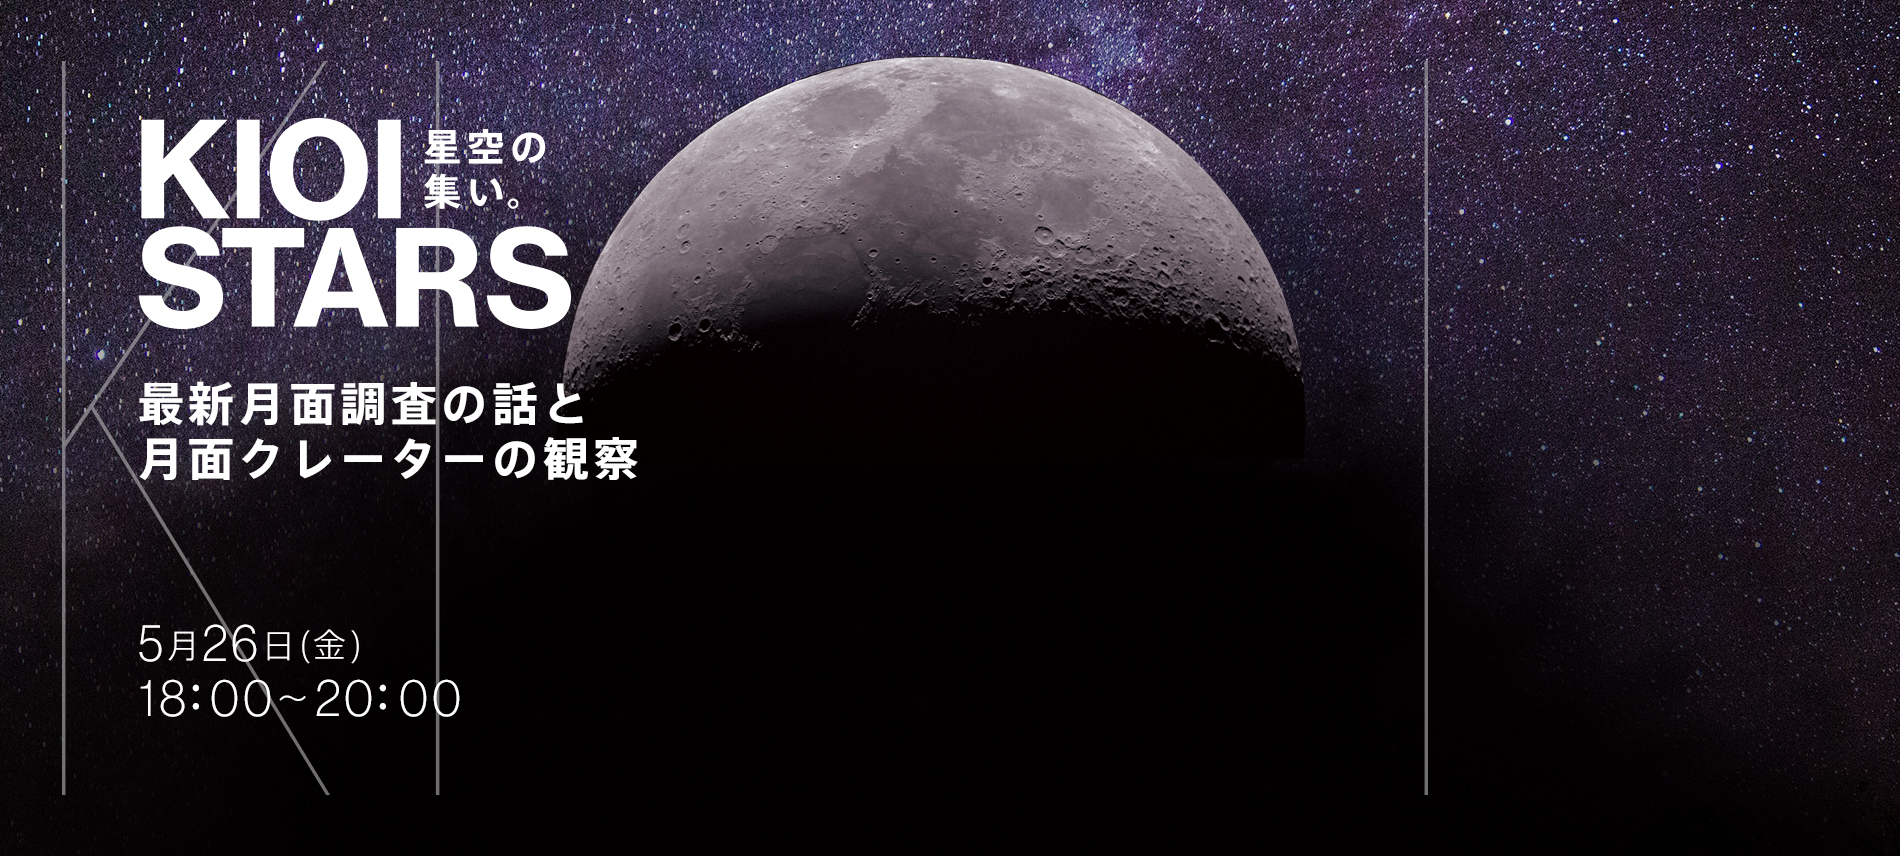 KIOI STARS 星空の集い。「最新月面調査の話と月面クレーターの観察」